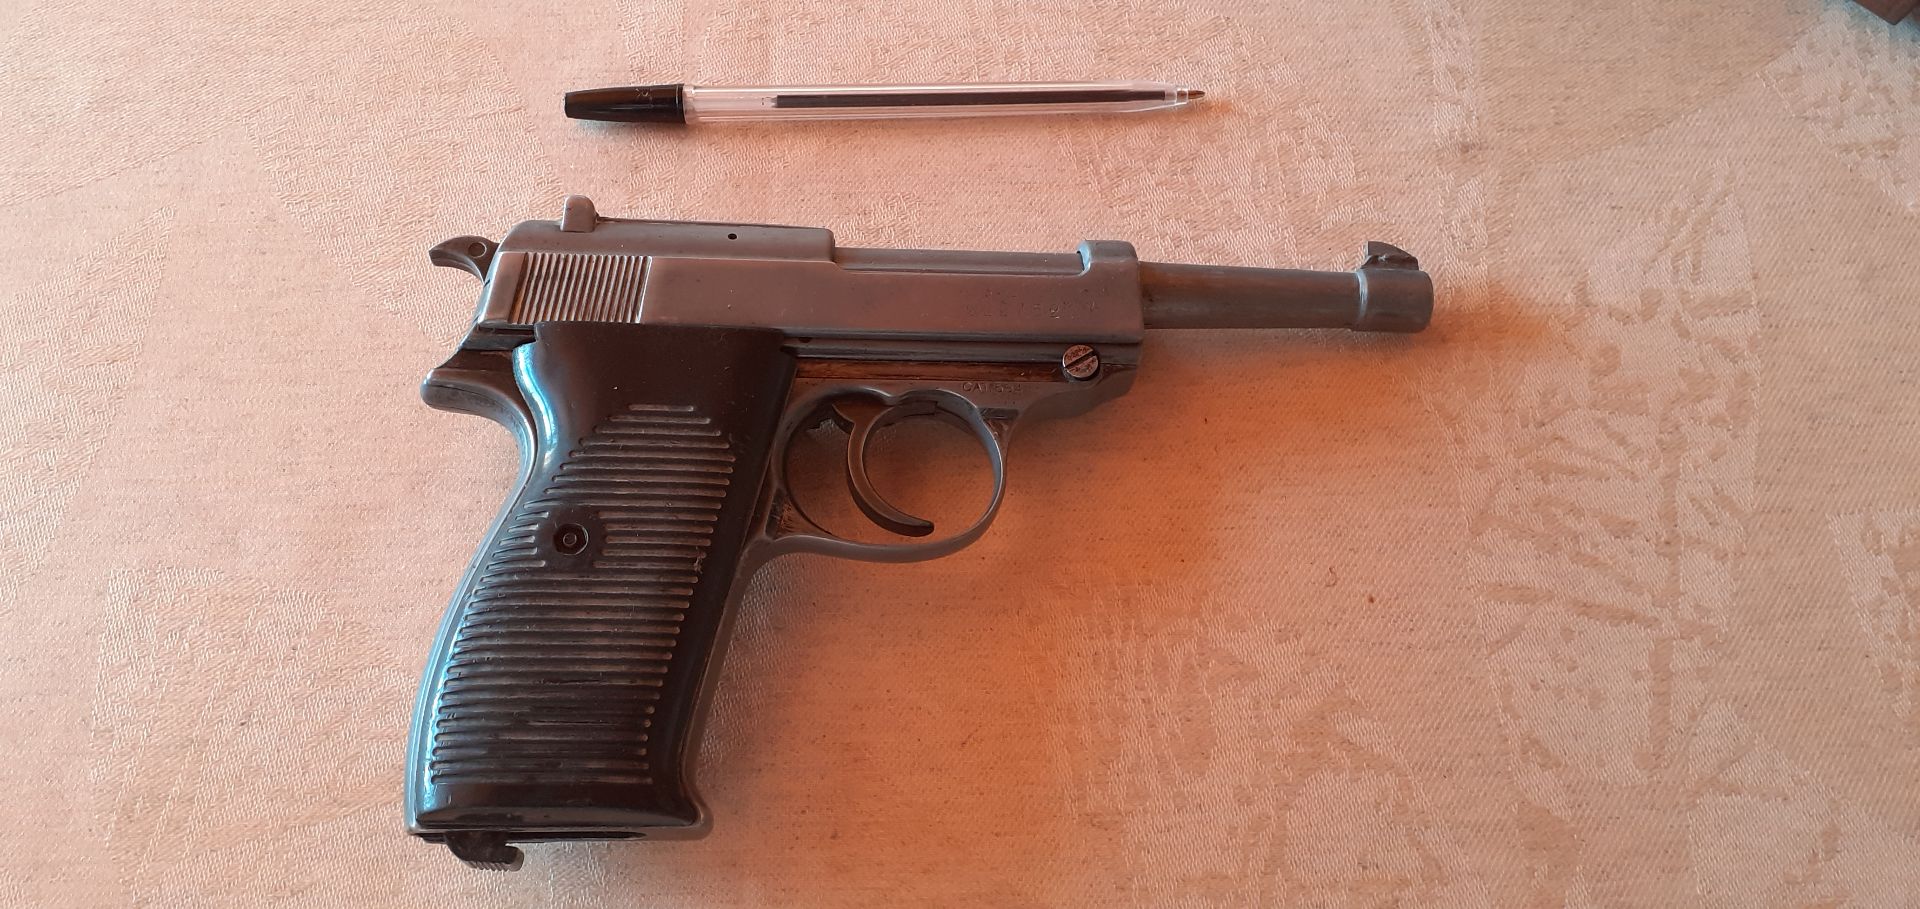 Pistolet d'alarme ME 38 P cal 8 mm K Bruni. - France Chasse - Les